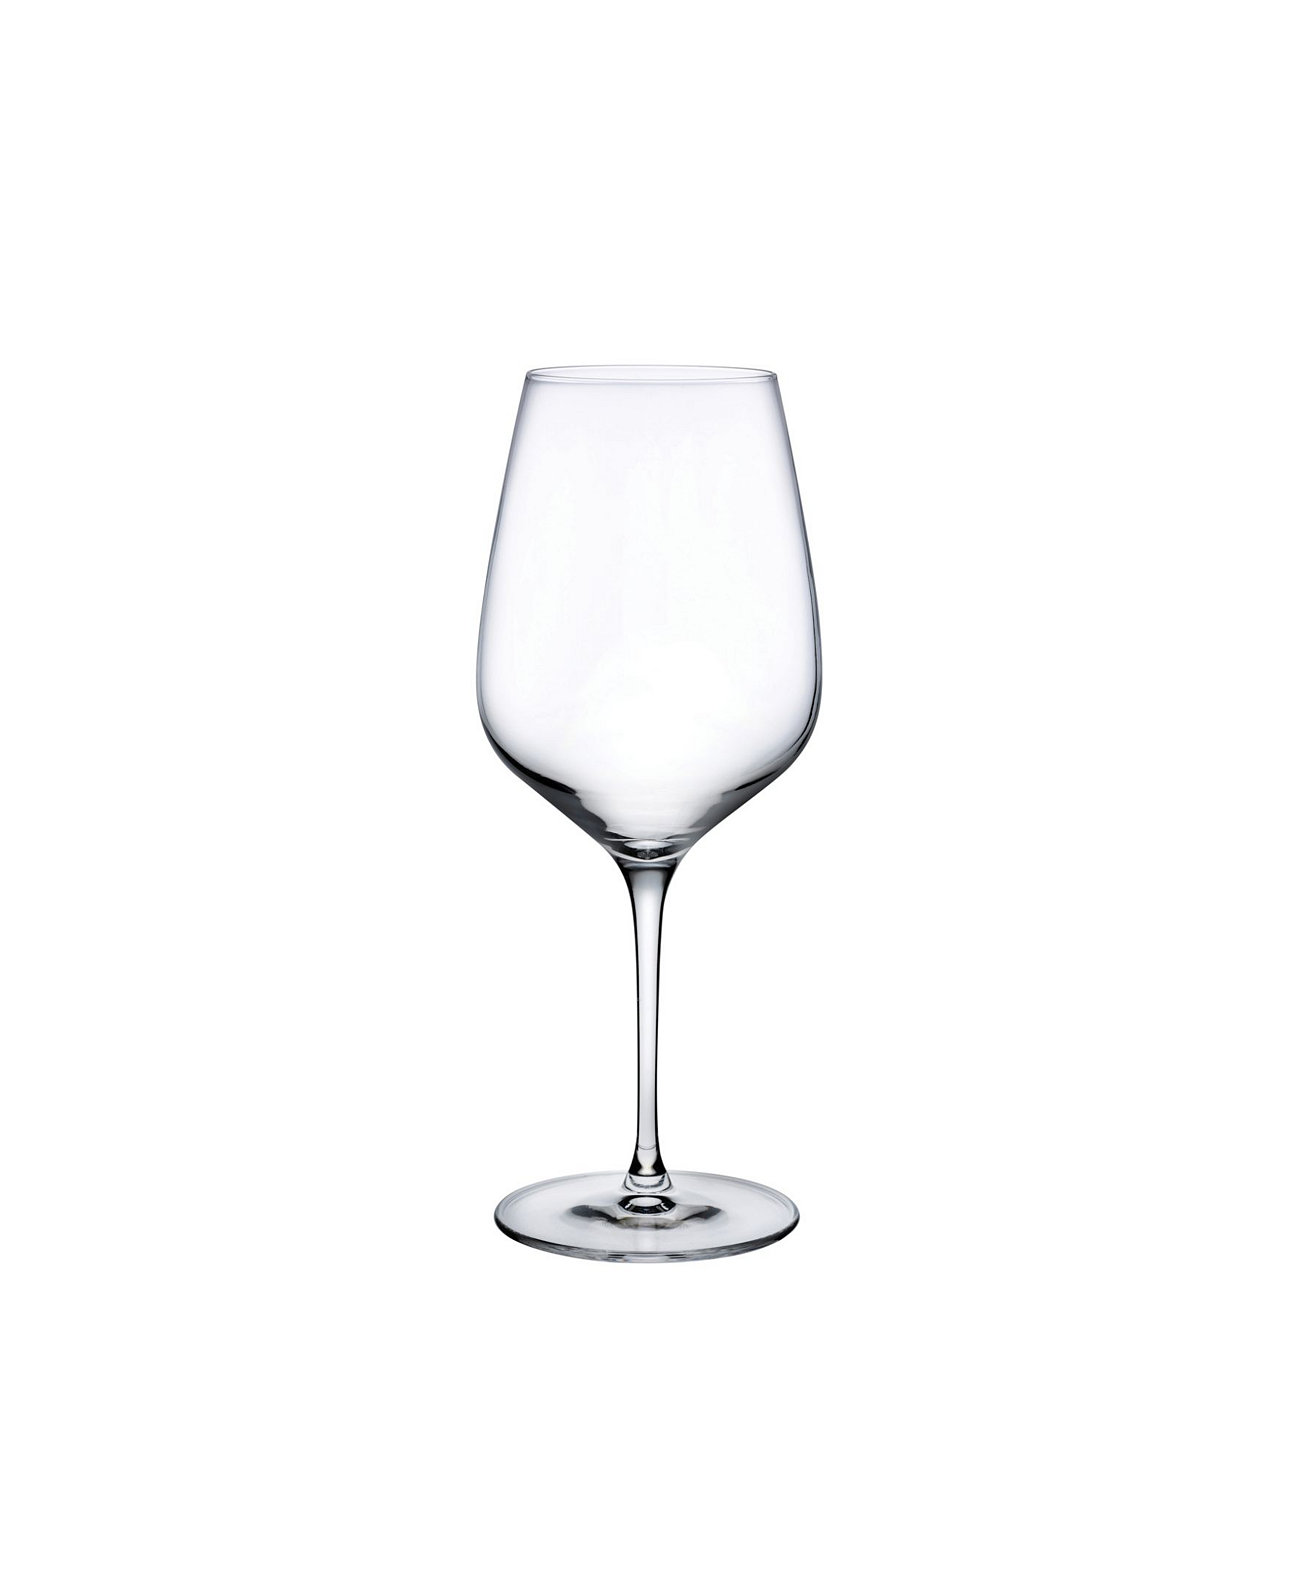 Бокал для красного вина Refine, набор из 2 шт. Nude Glass